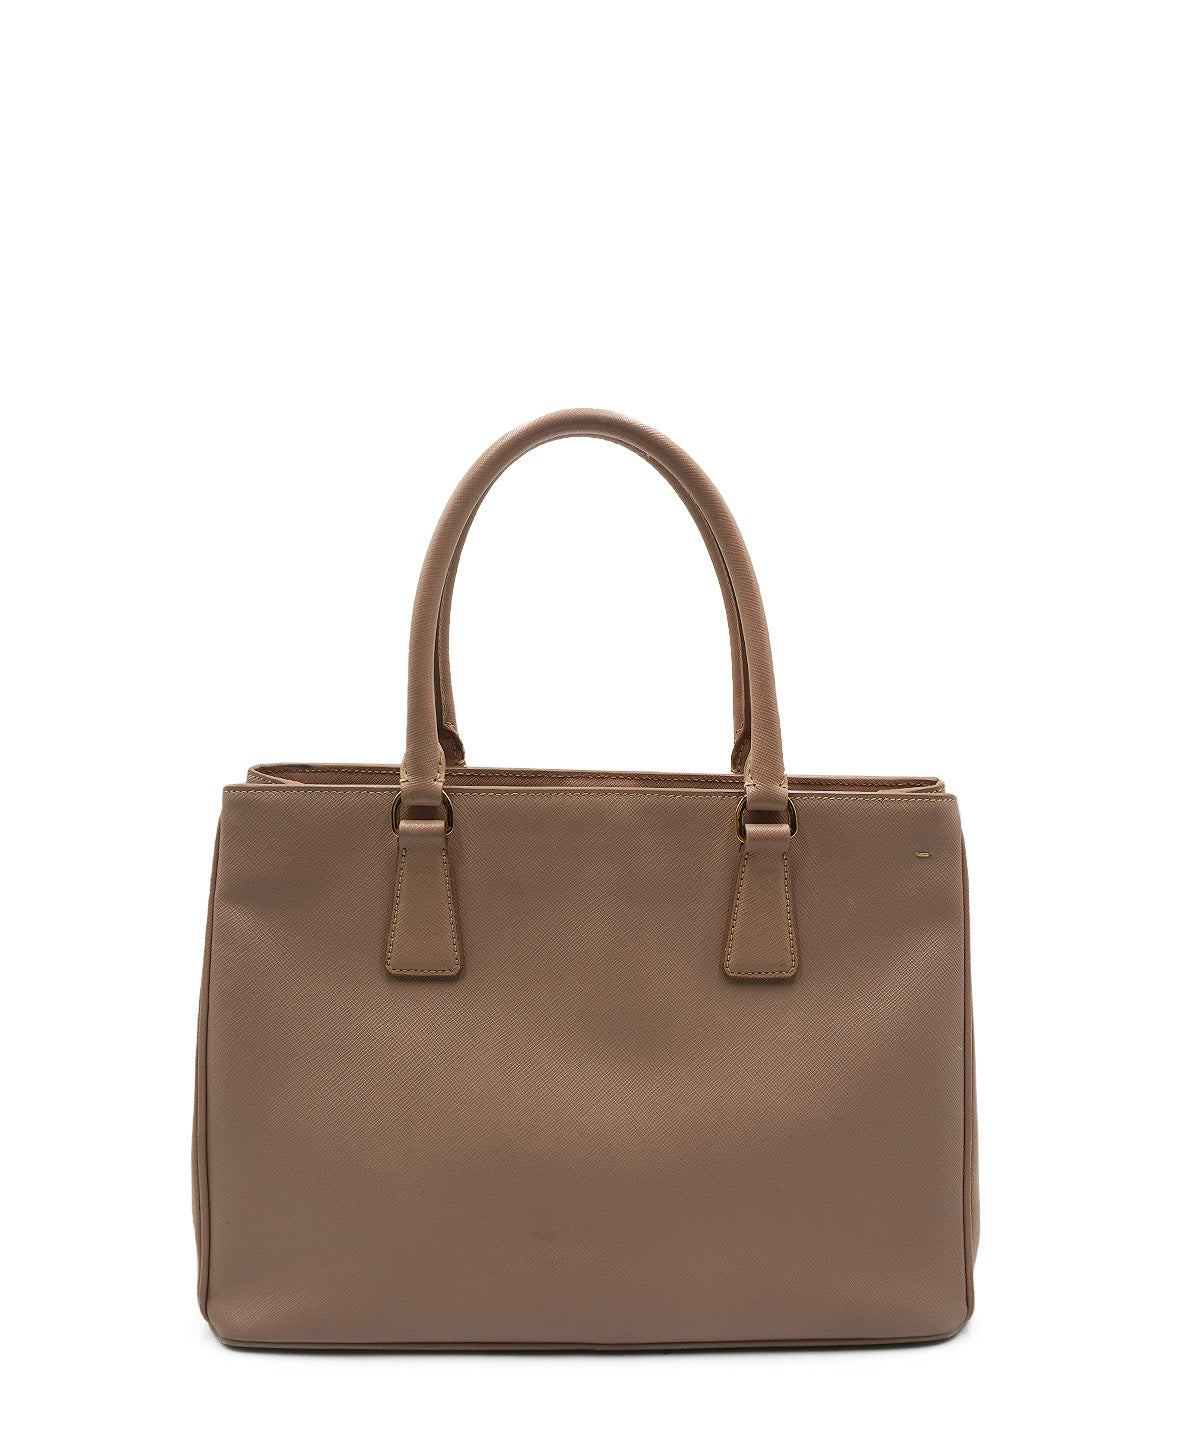 Amanda eve on X: Prada Galleria bag in Saffiano leather Double